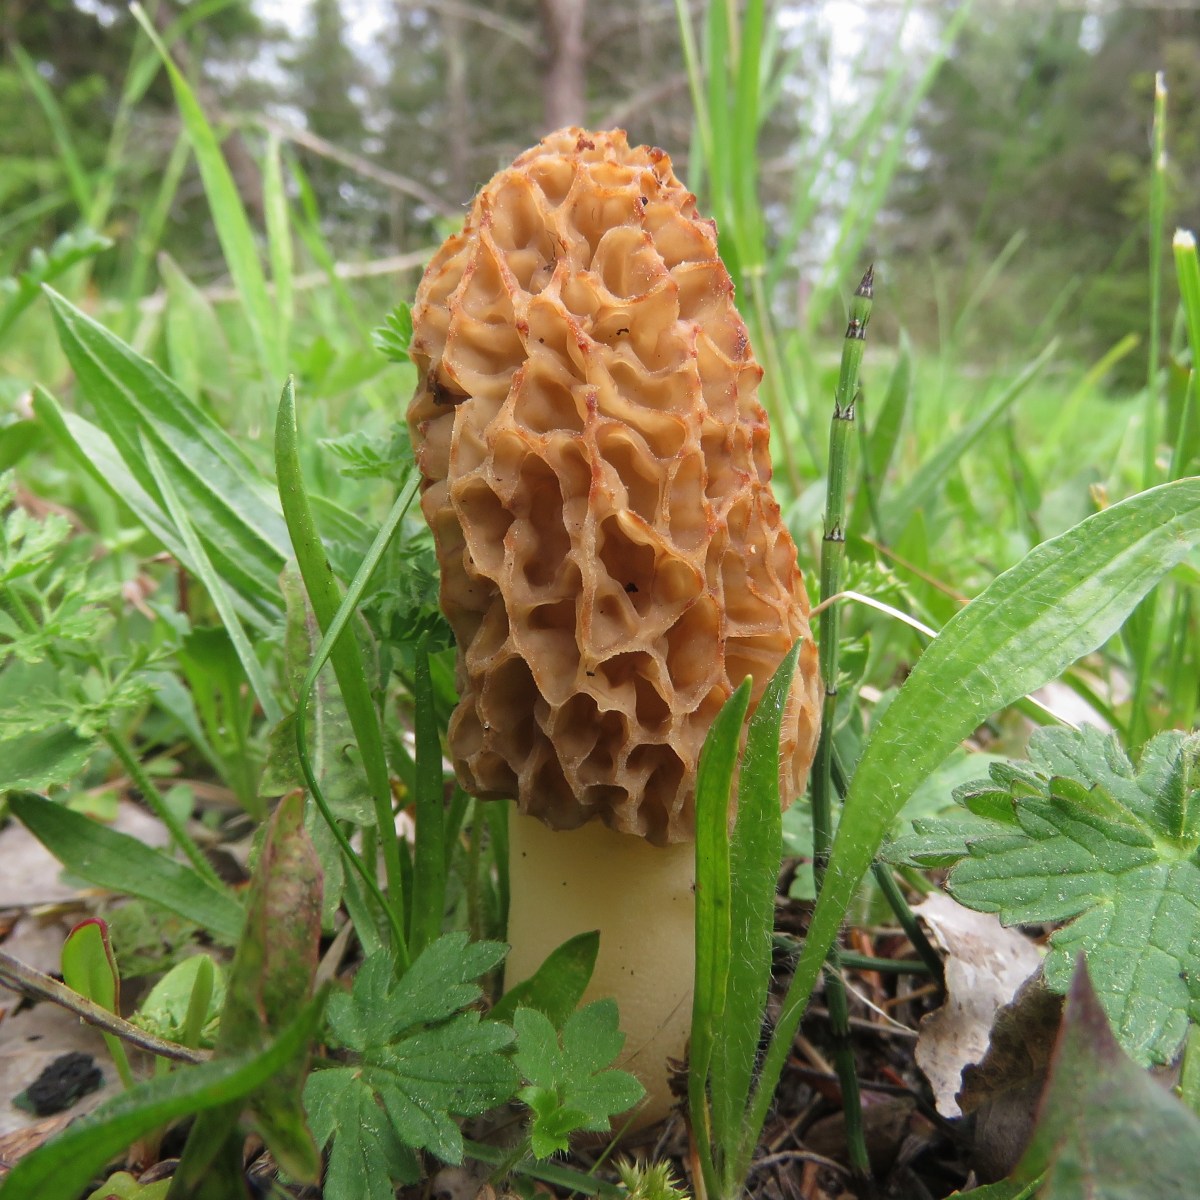 Morel mushroom in the ground